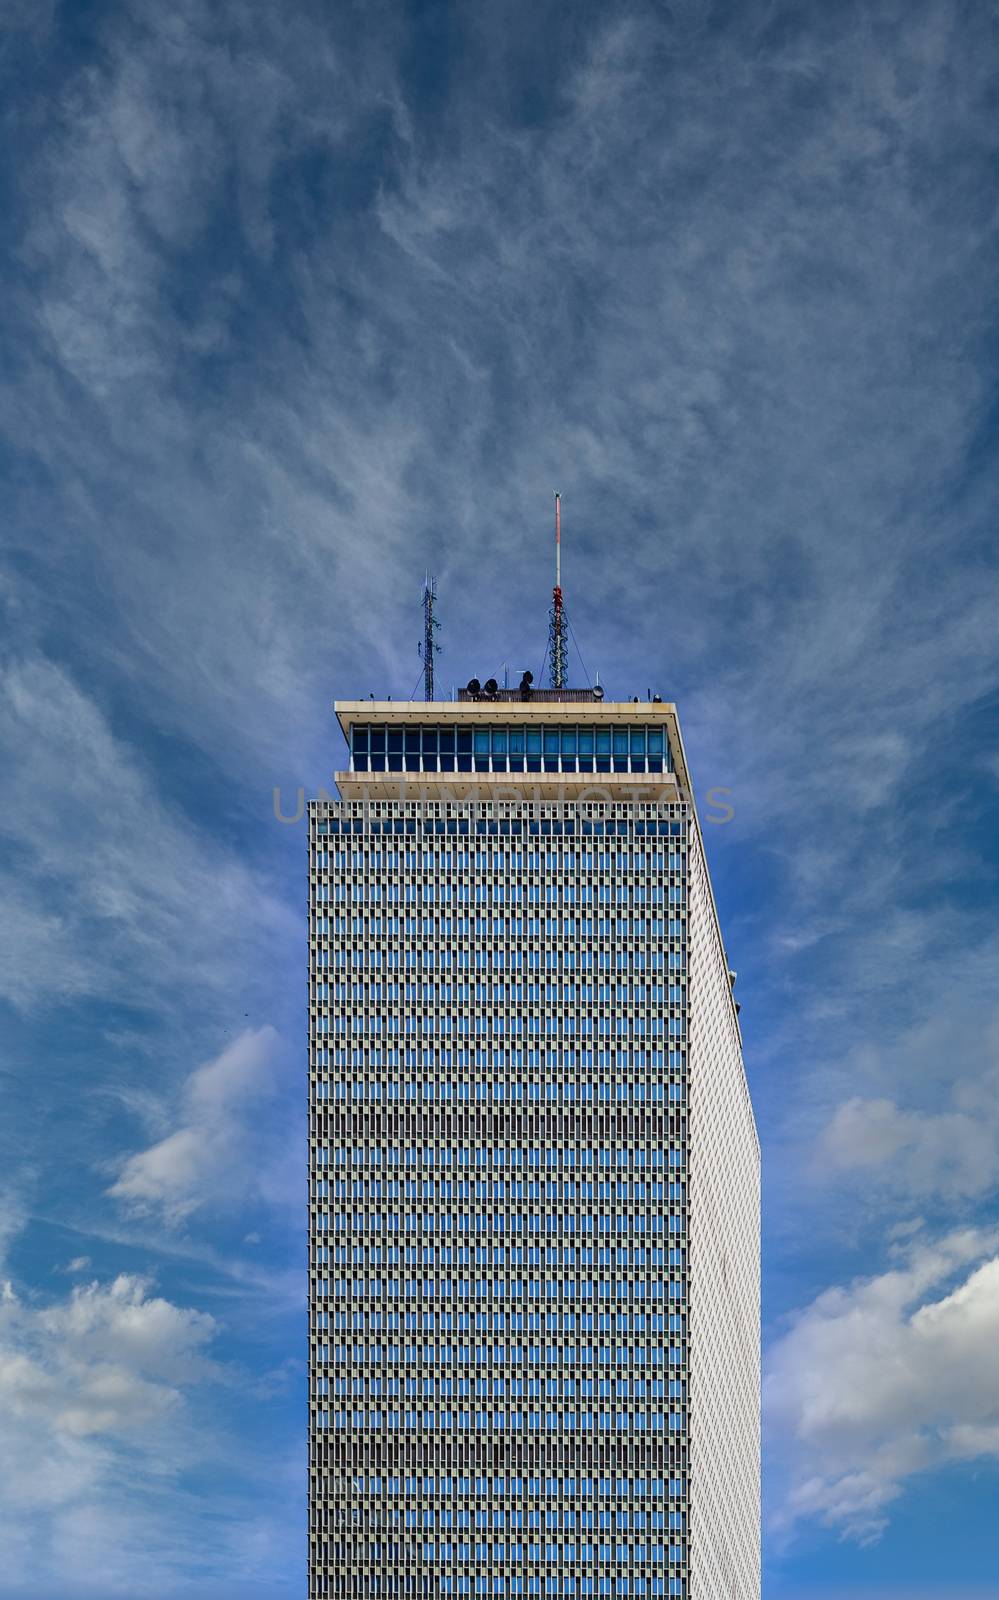 Grey Building on Nice sky by dbvirago